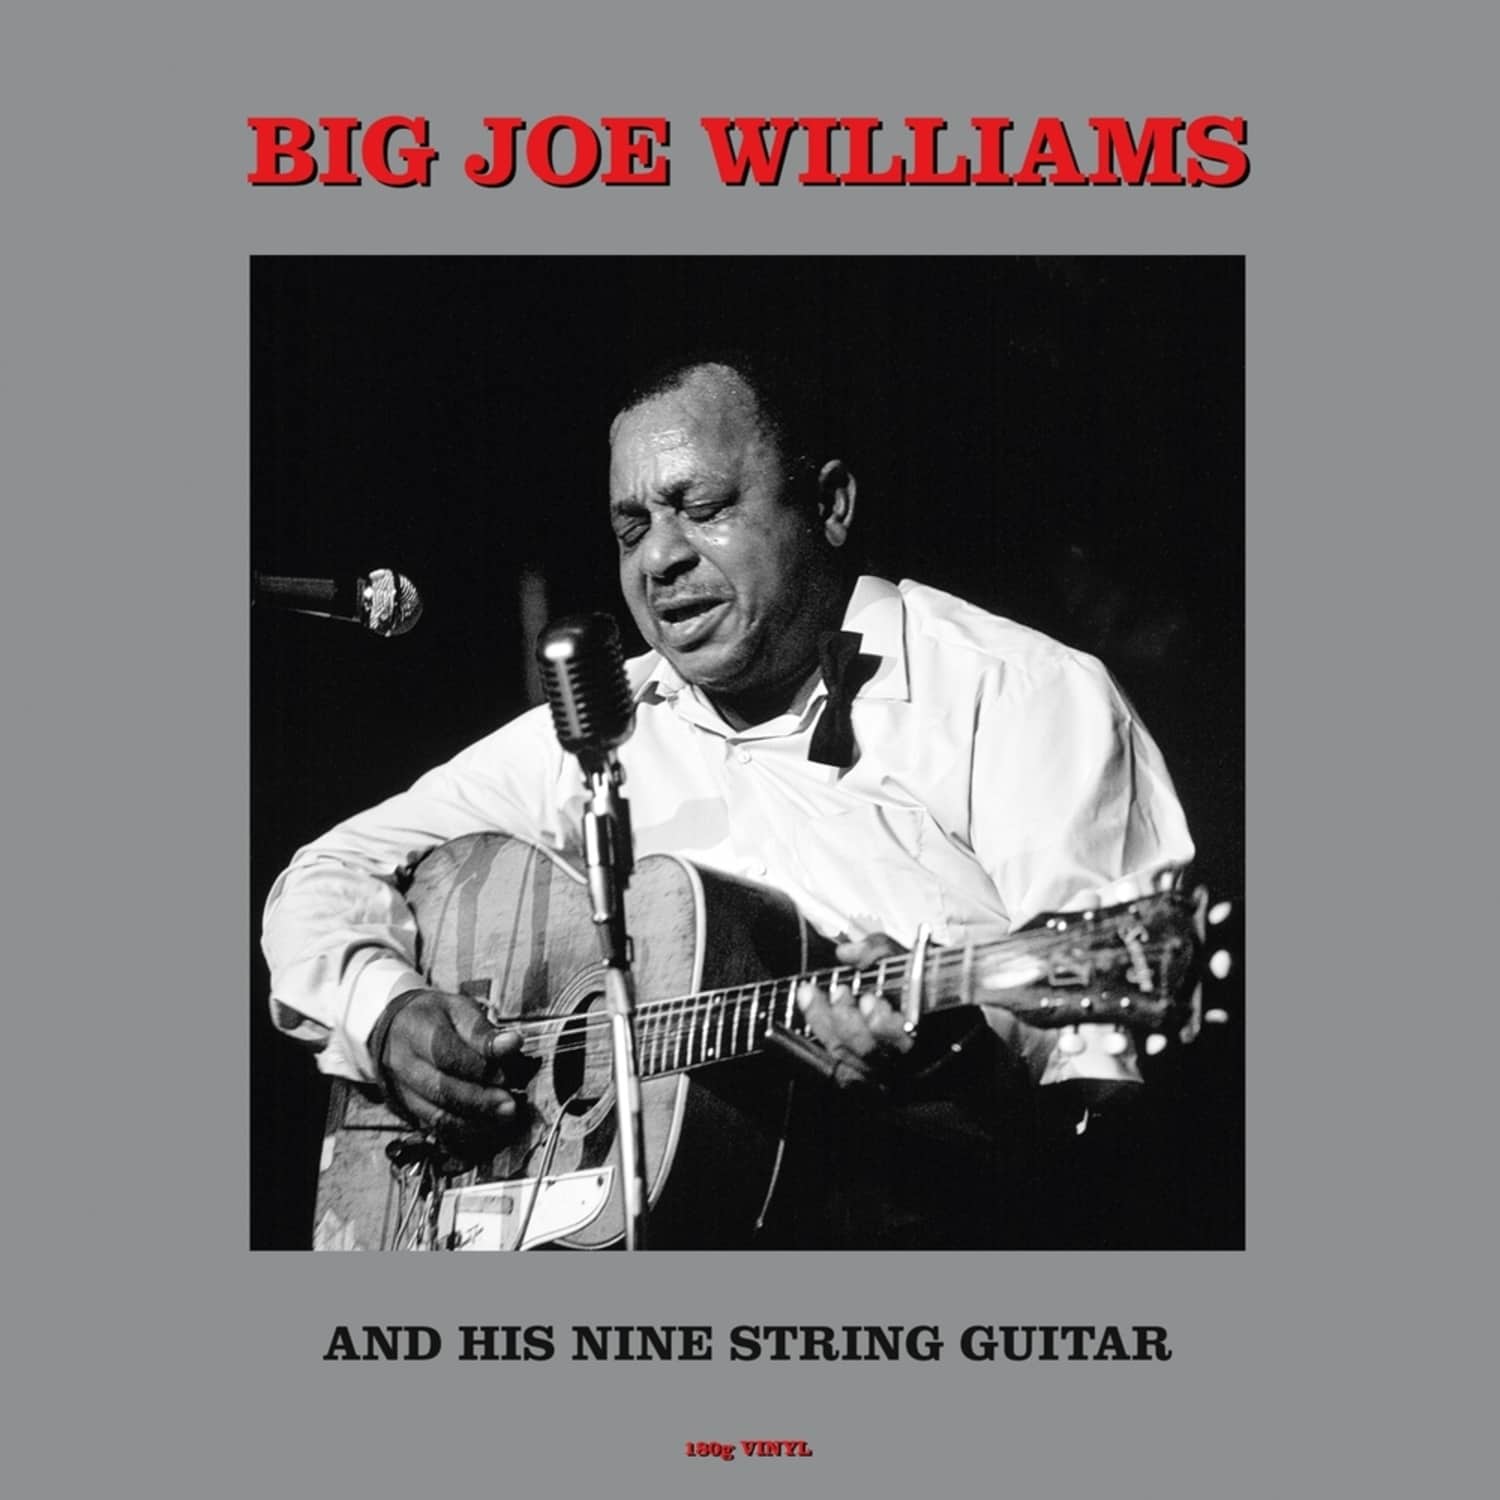 Big Joe Williams - AND HIS NINE STRING GUITAR